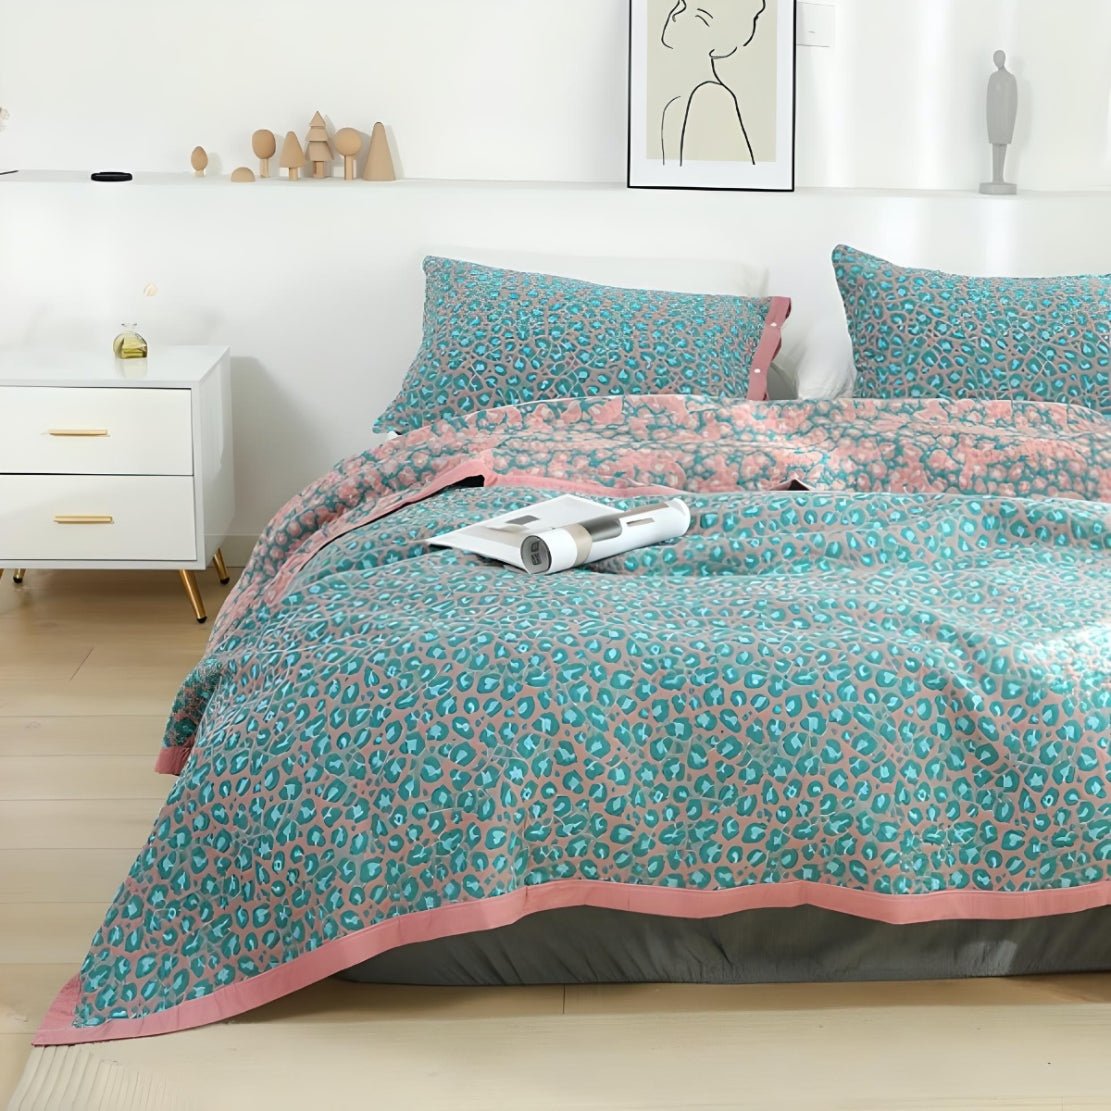 Bedroom with blue pink small cheetah animal print bedding set